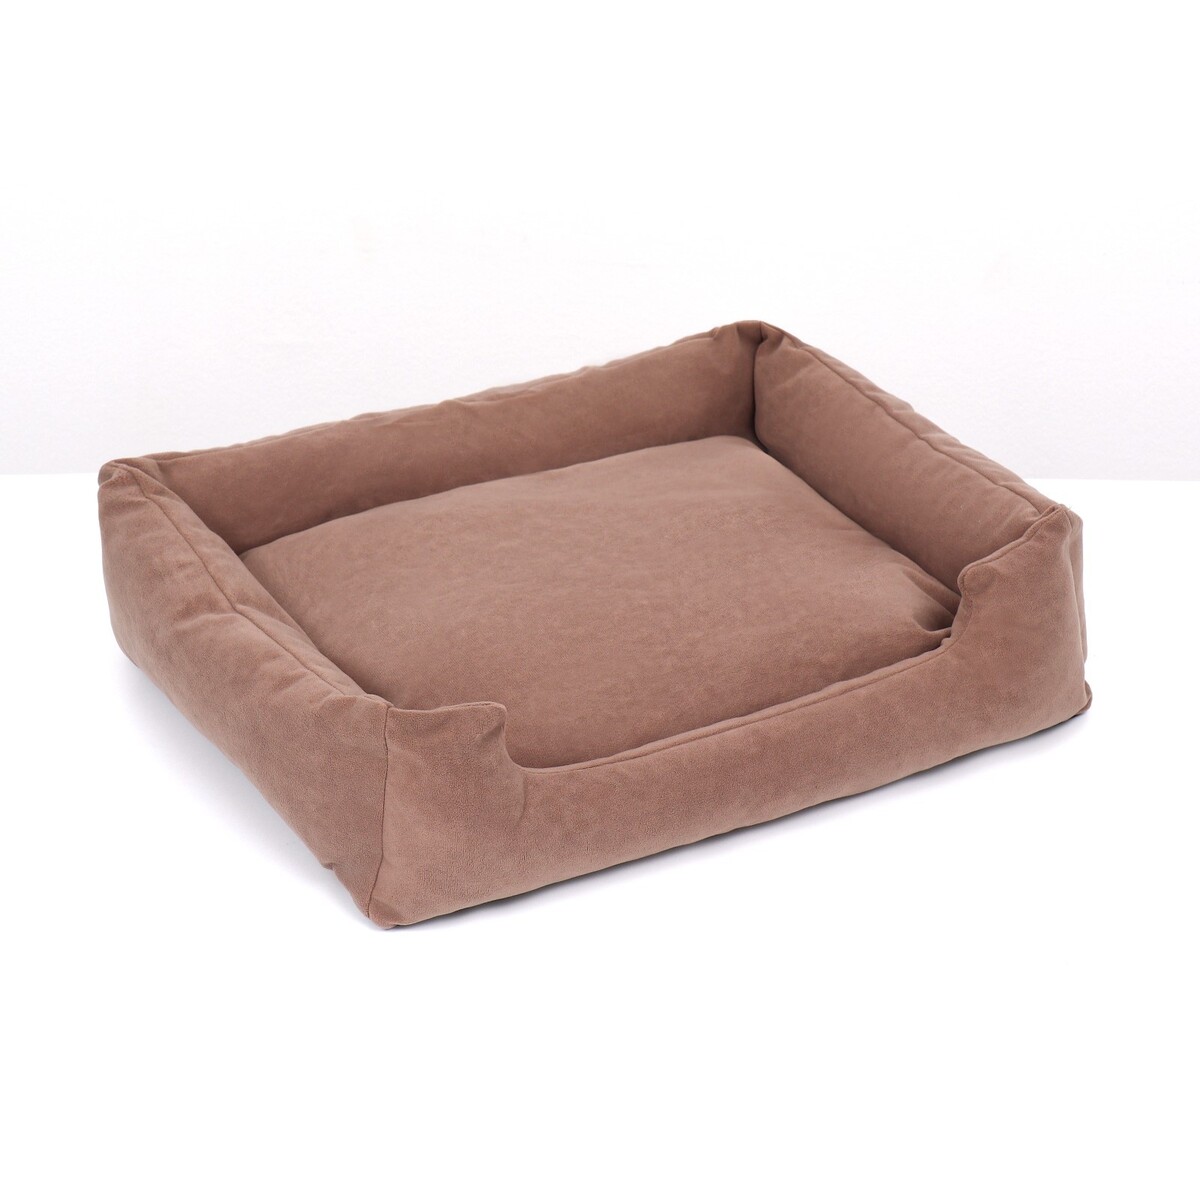 Лежанка-диван, 53 х 42 х 11 см, коричневая лежанка с косточкой 45х35х11 см коричневая